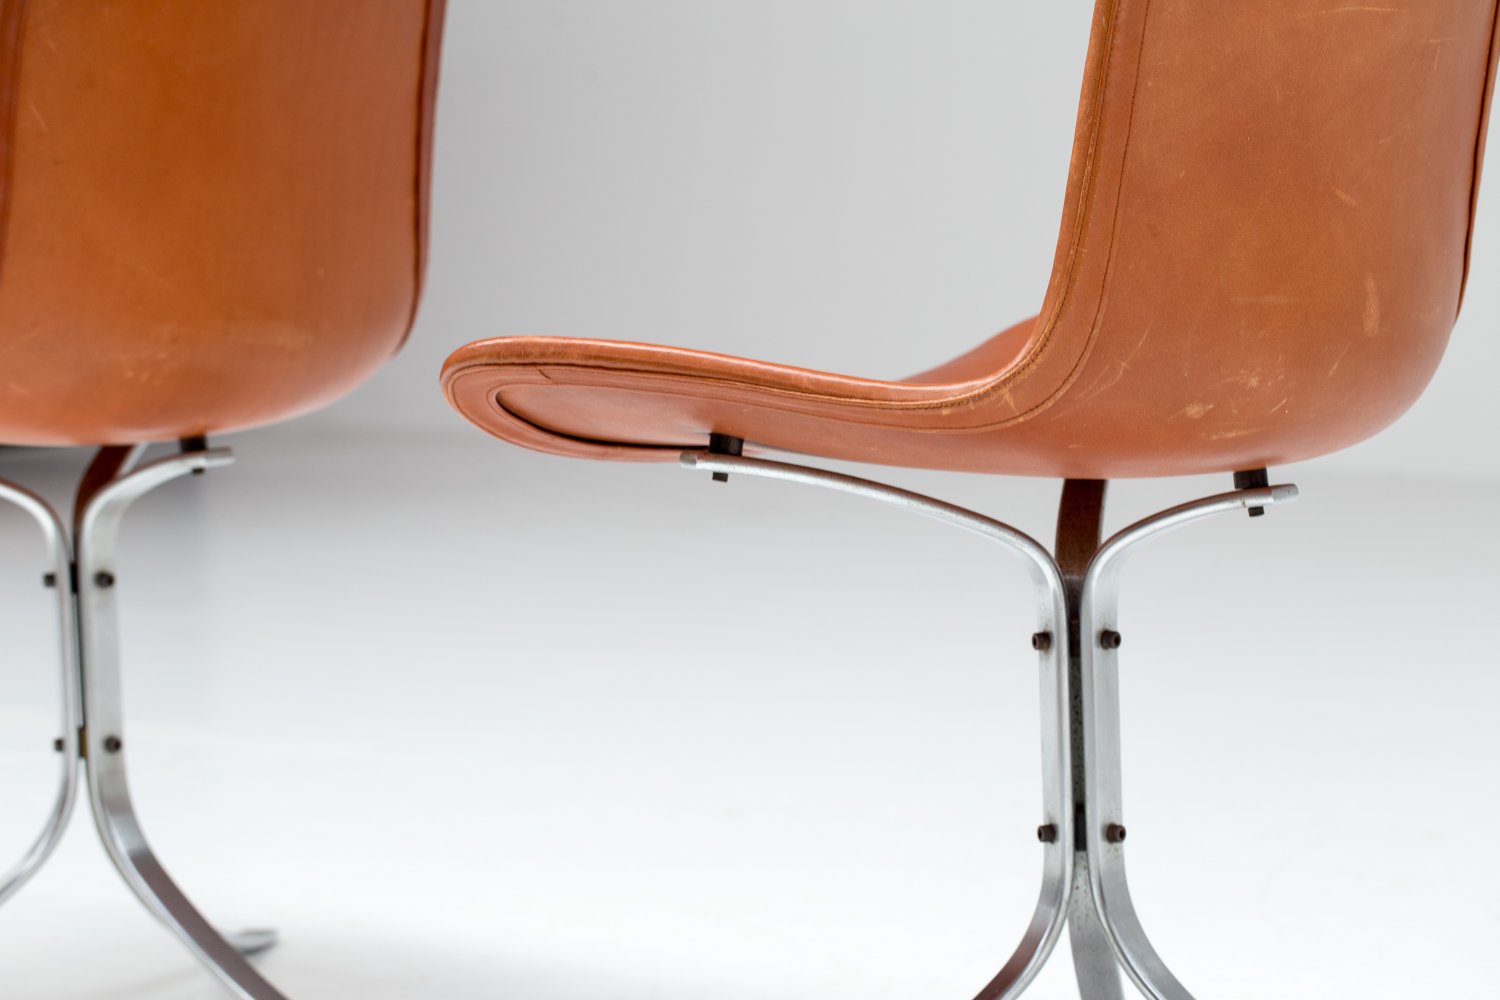 Pair of PK9 chairs by Poul Kjaerholm